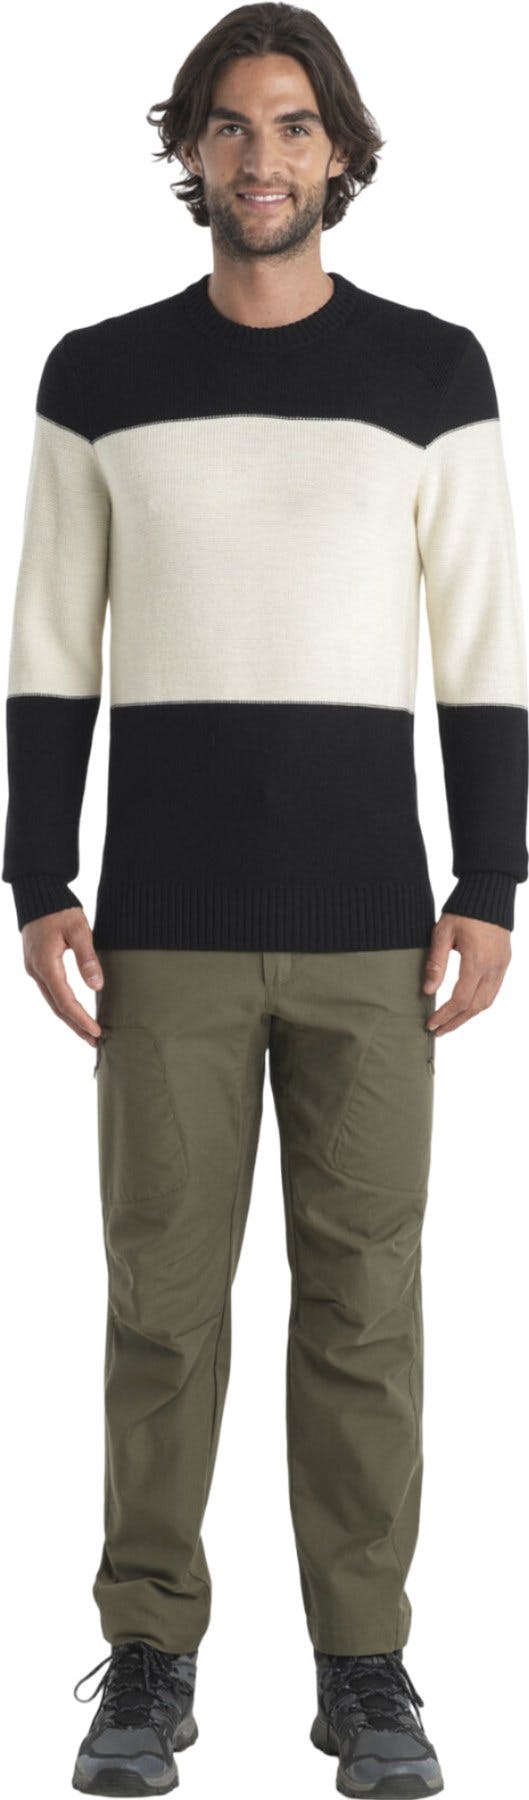 Product image for Merino Waypoint Crewe Sweater - Men's